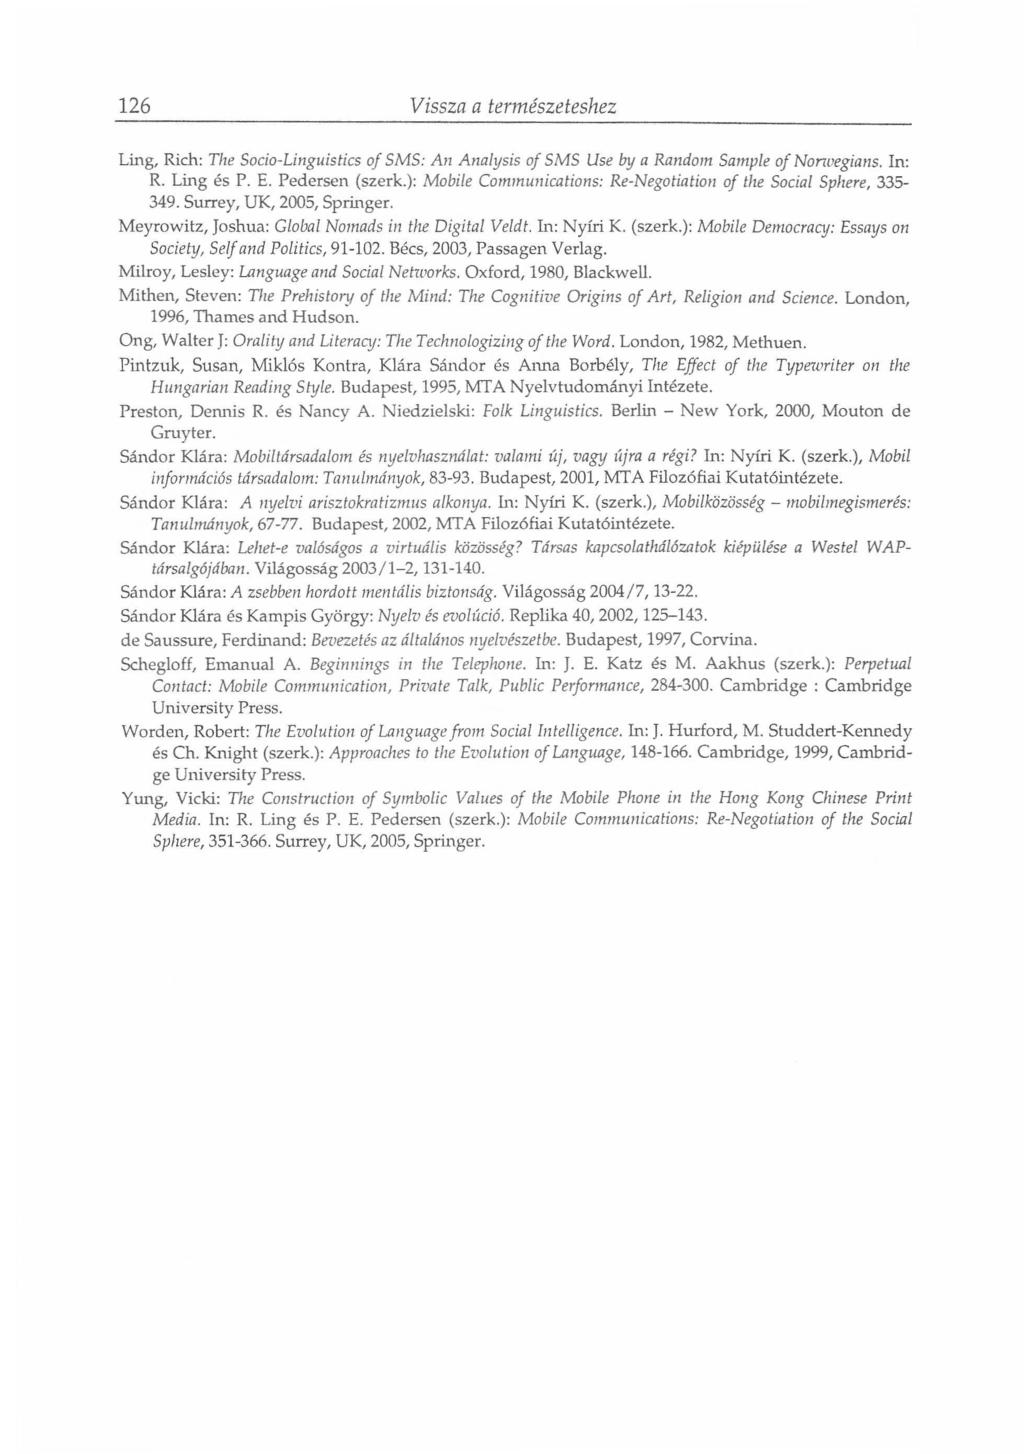 126 Vissza a természeteshez Ling, Rich: The Socio-Linguistics of SMS: An Analysis of SMS Use by a Random Sample of Norwegians. In: R. Ling és P. E. Pedersen (szerk.